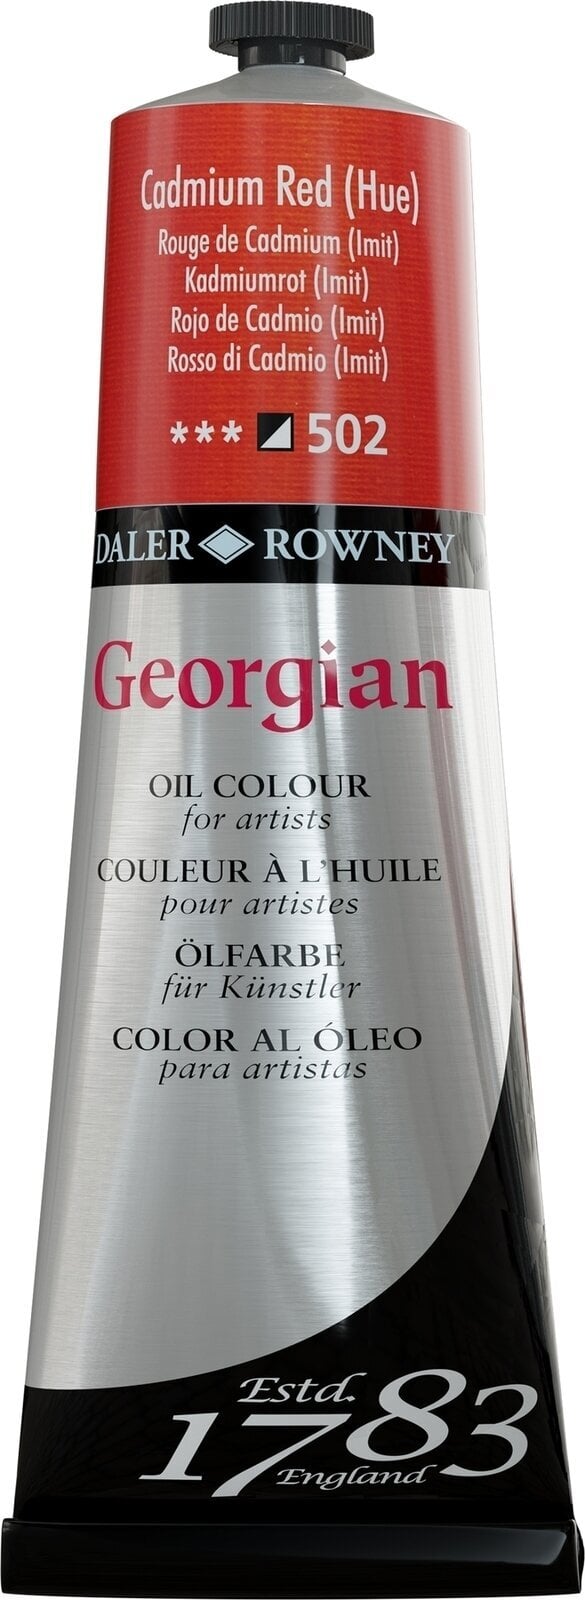 Oil colour Daler Rowney Georgian Oil Paint Cadmium Red Hue 225 ml 1 pc